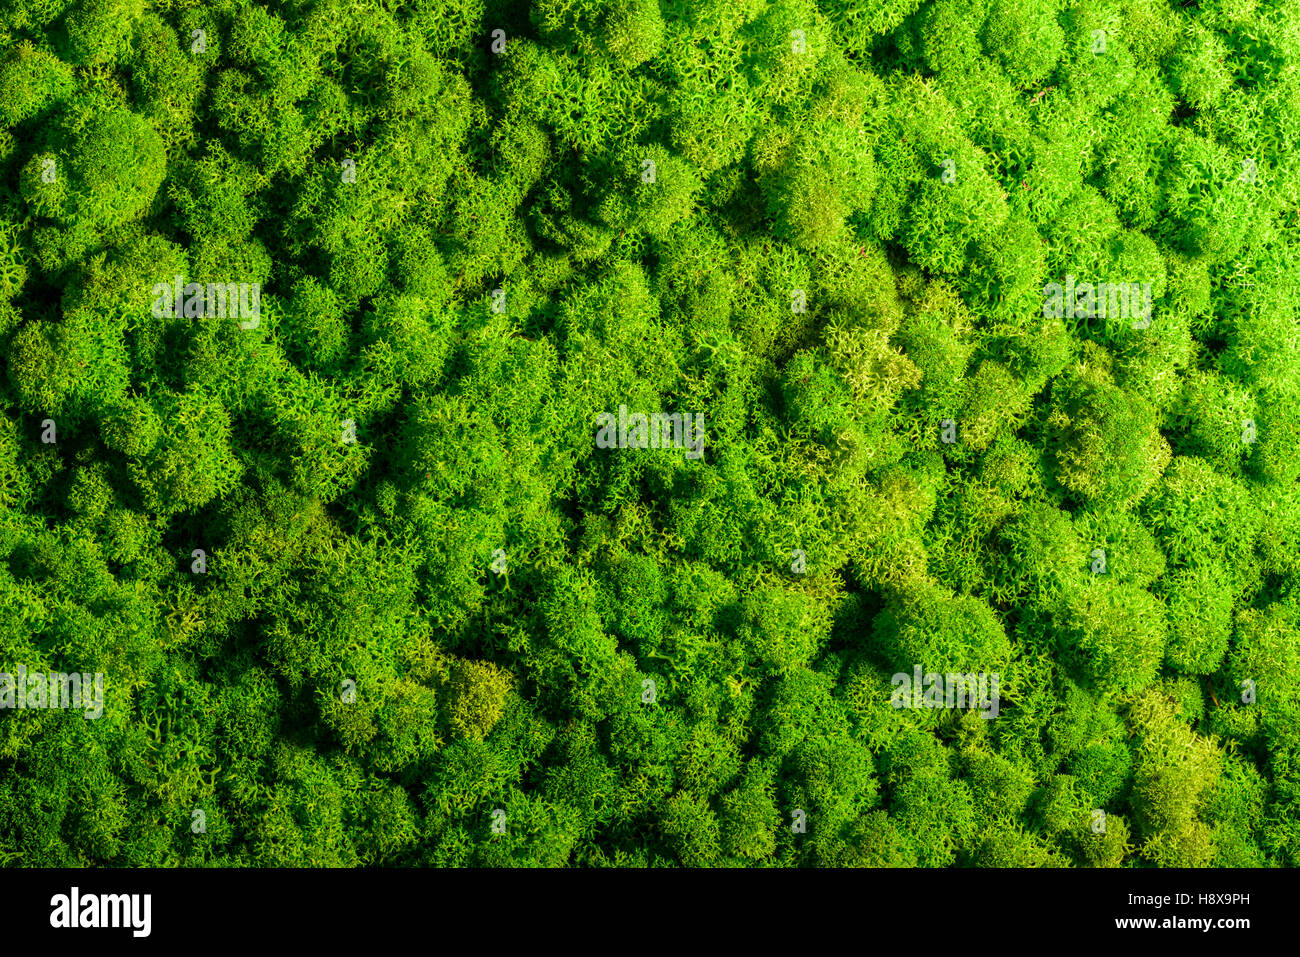 Renne parete, muro verde decorazione fatta di renne lichen Cladonia rangiferina Foto Stock